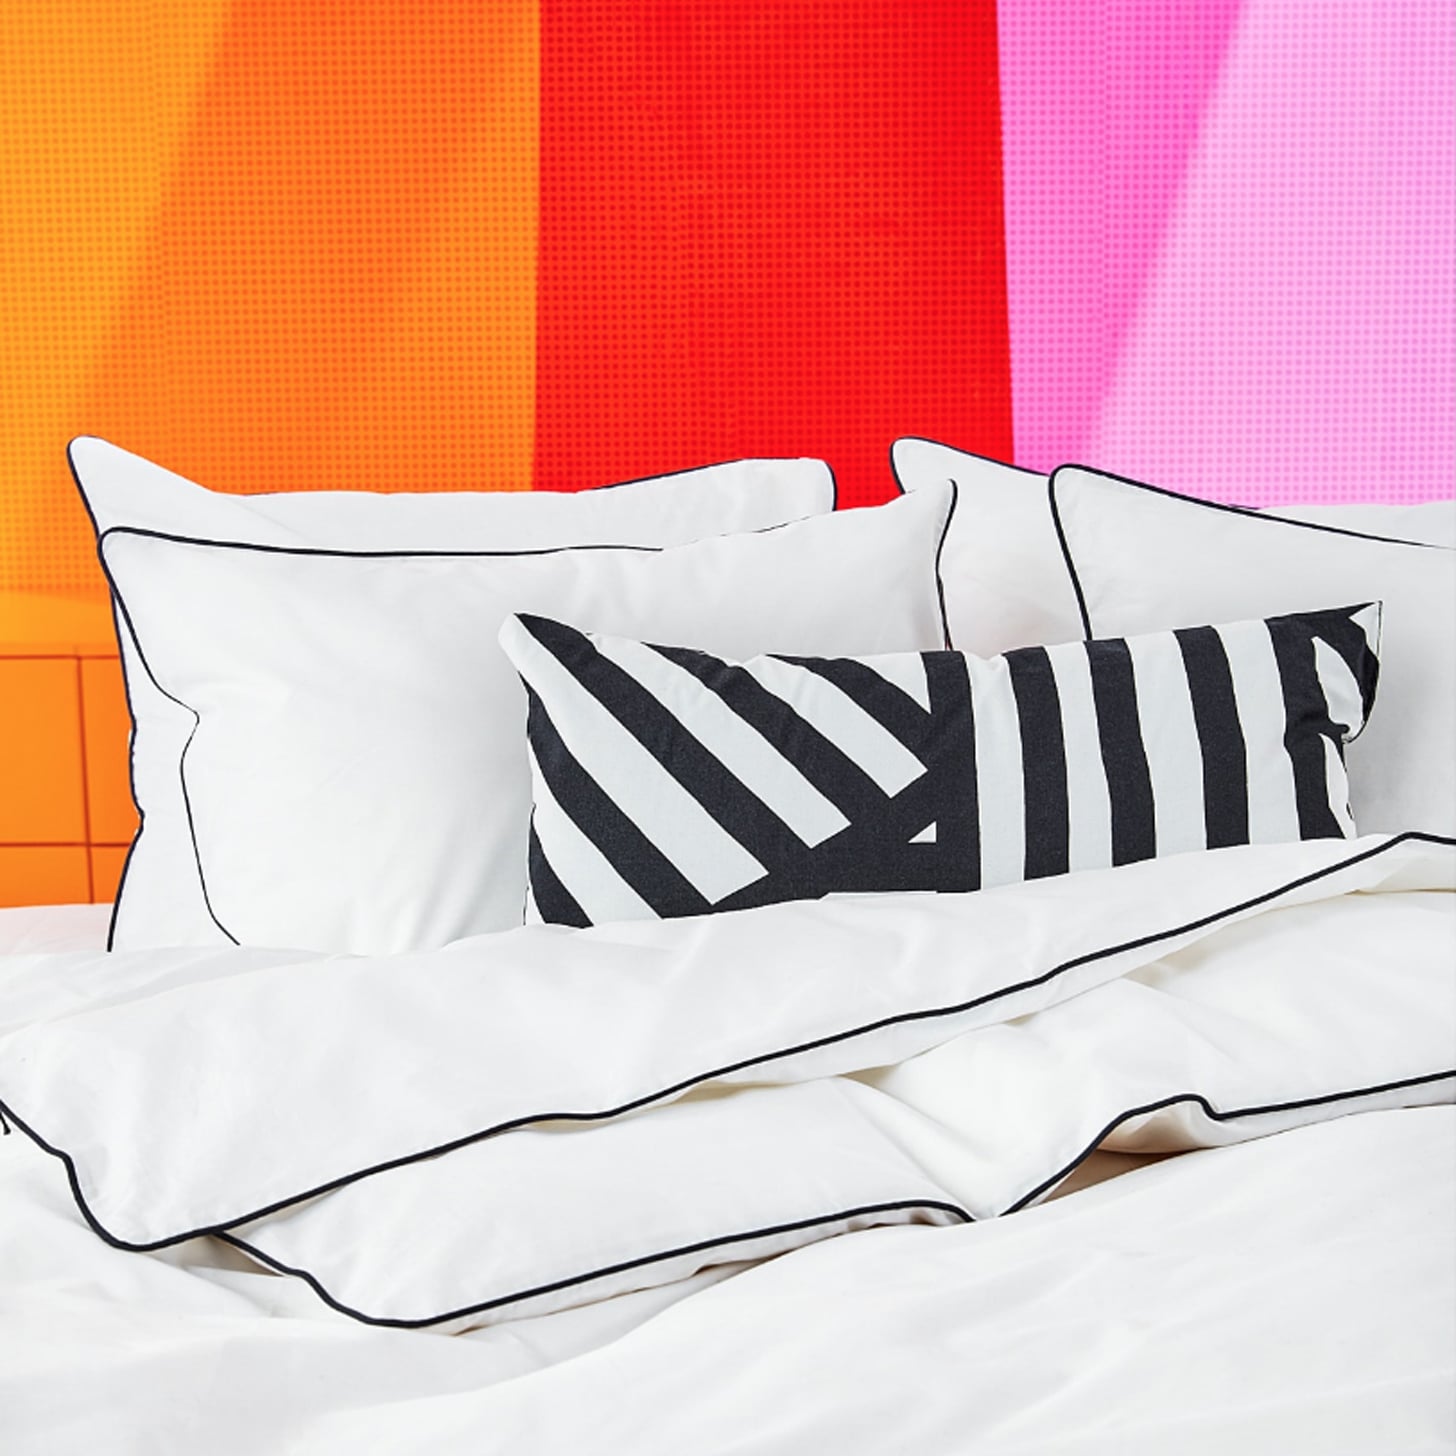 Alvine Kvist Duvet Cover And Pillowcase Set Ikea Summer Sale